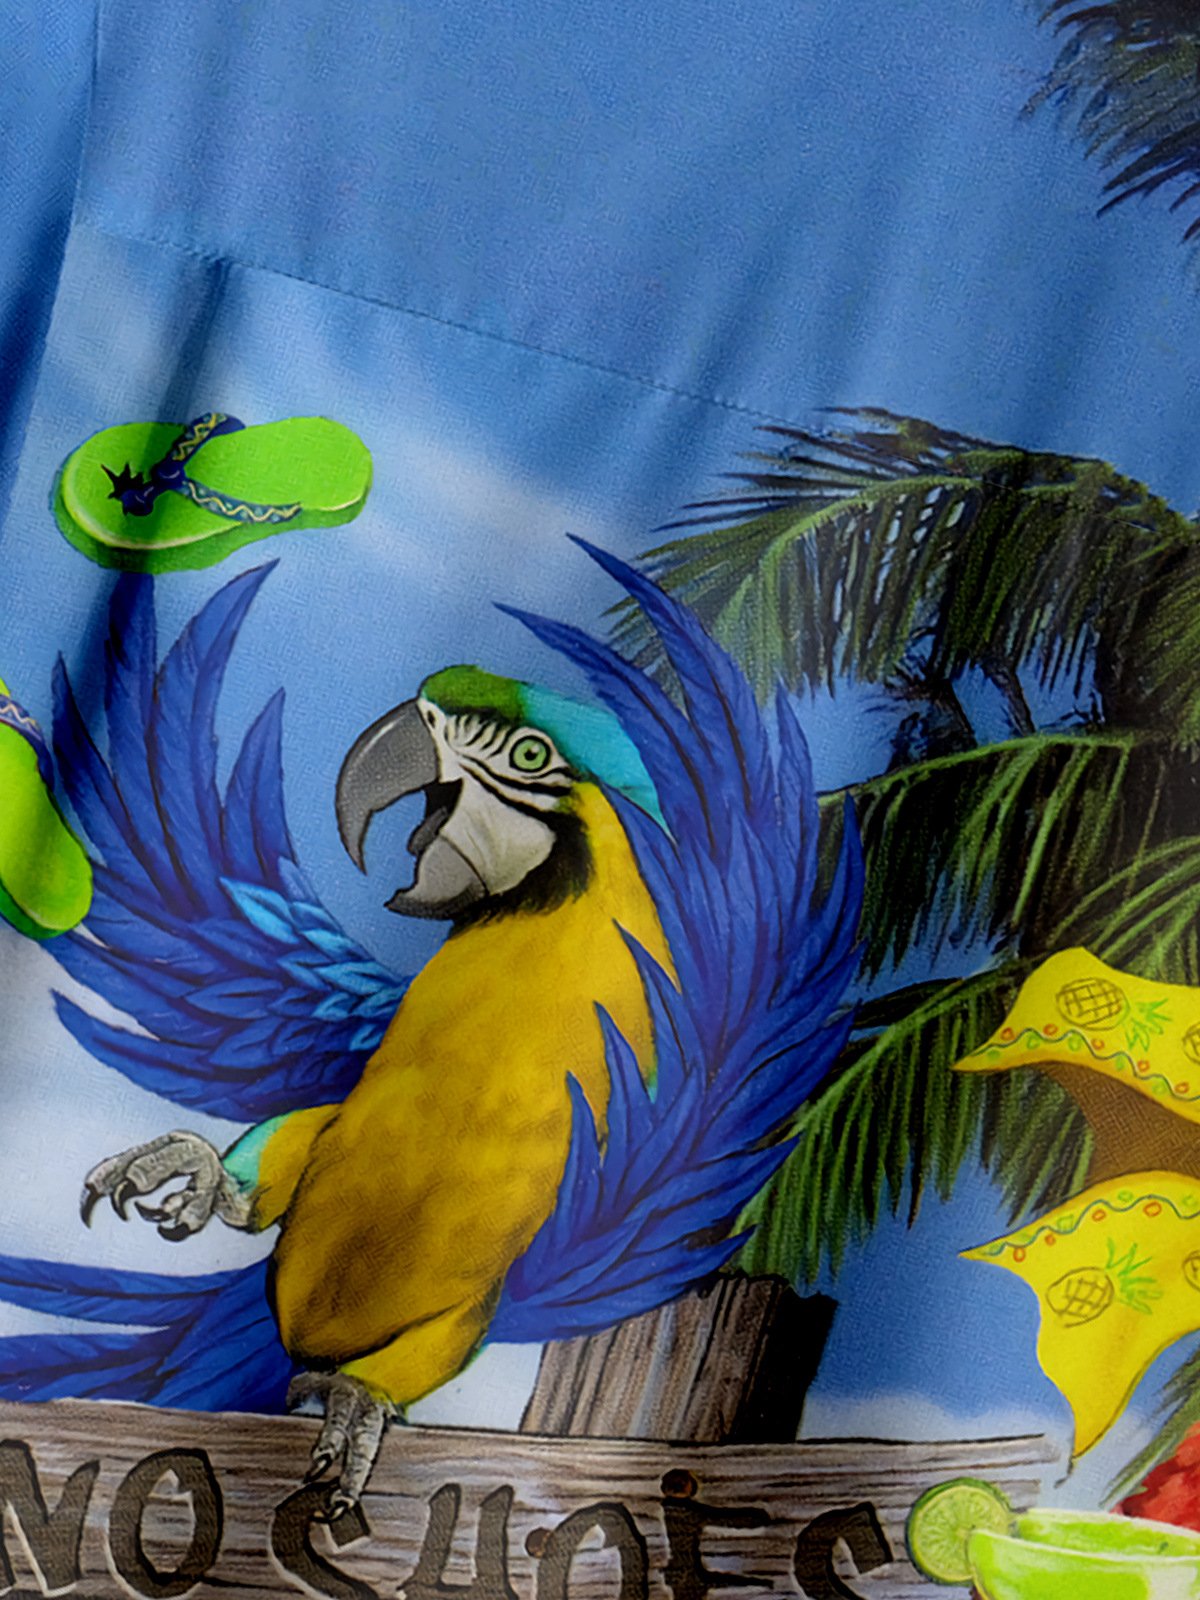 Hardaddy Parrots Chest Pocket Short Sleeve Hawaiian Shirt